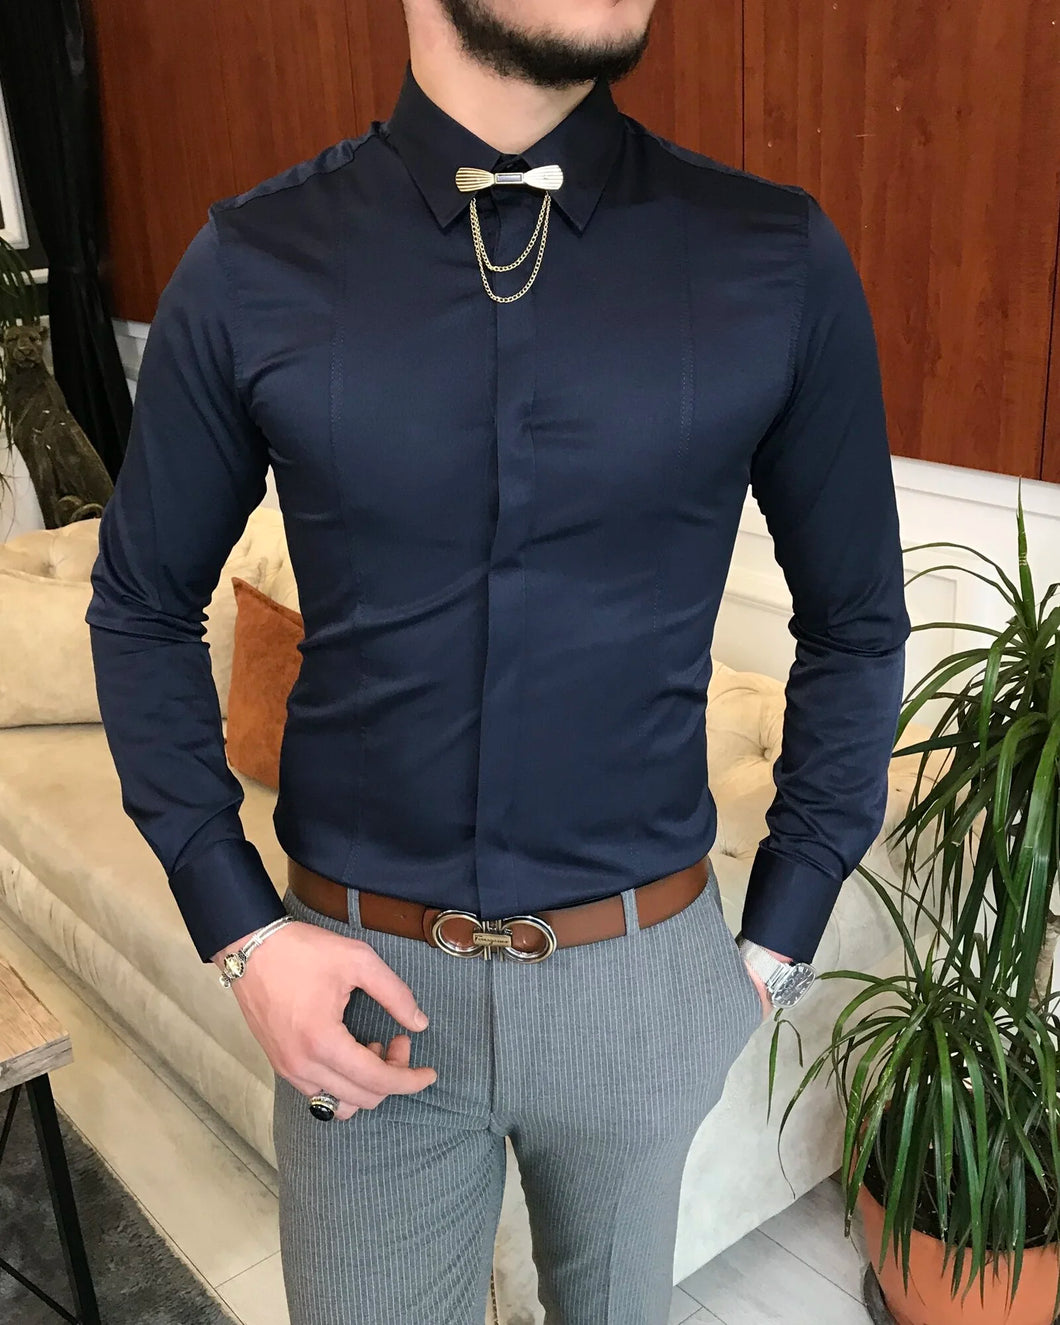 Olivier Laurent Trim Fit Solid Color Dress Shirt